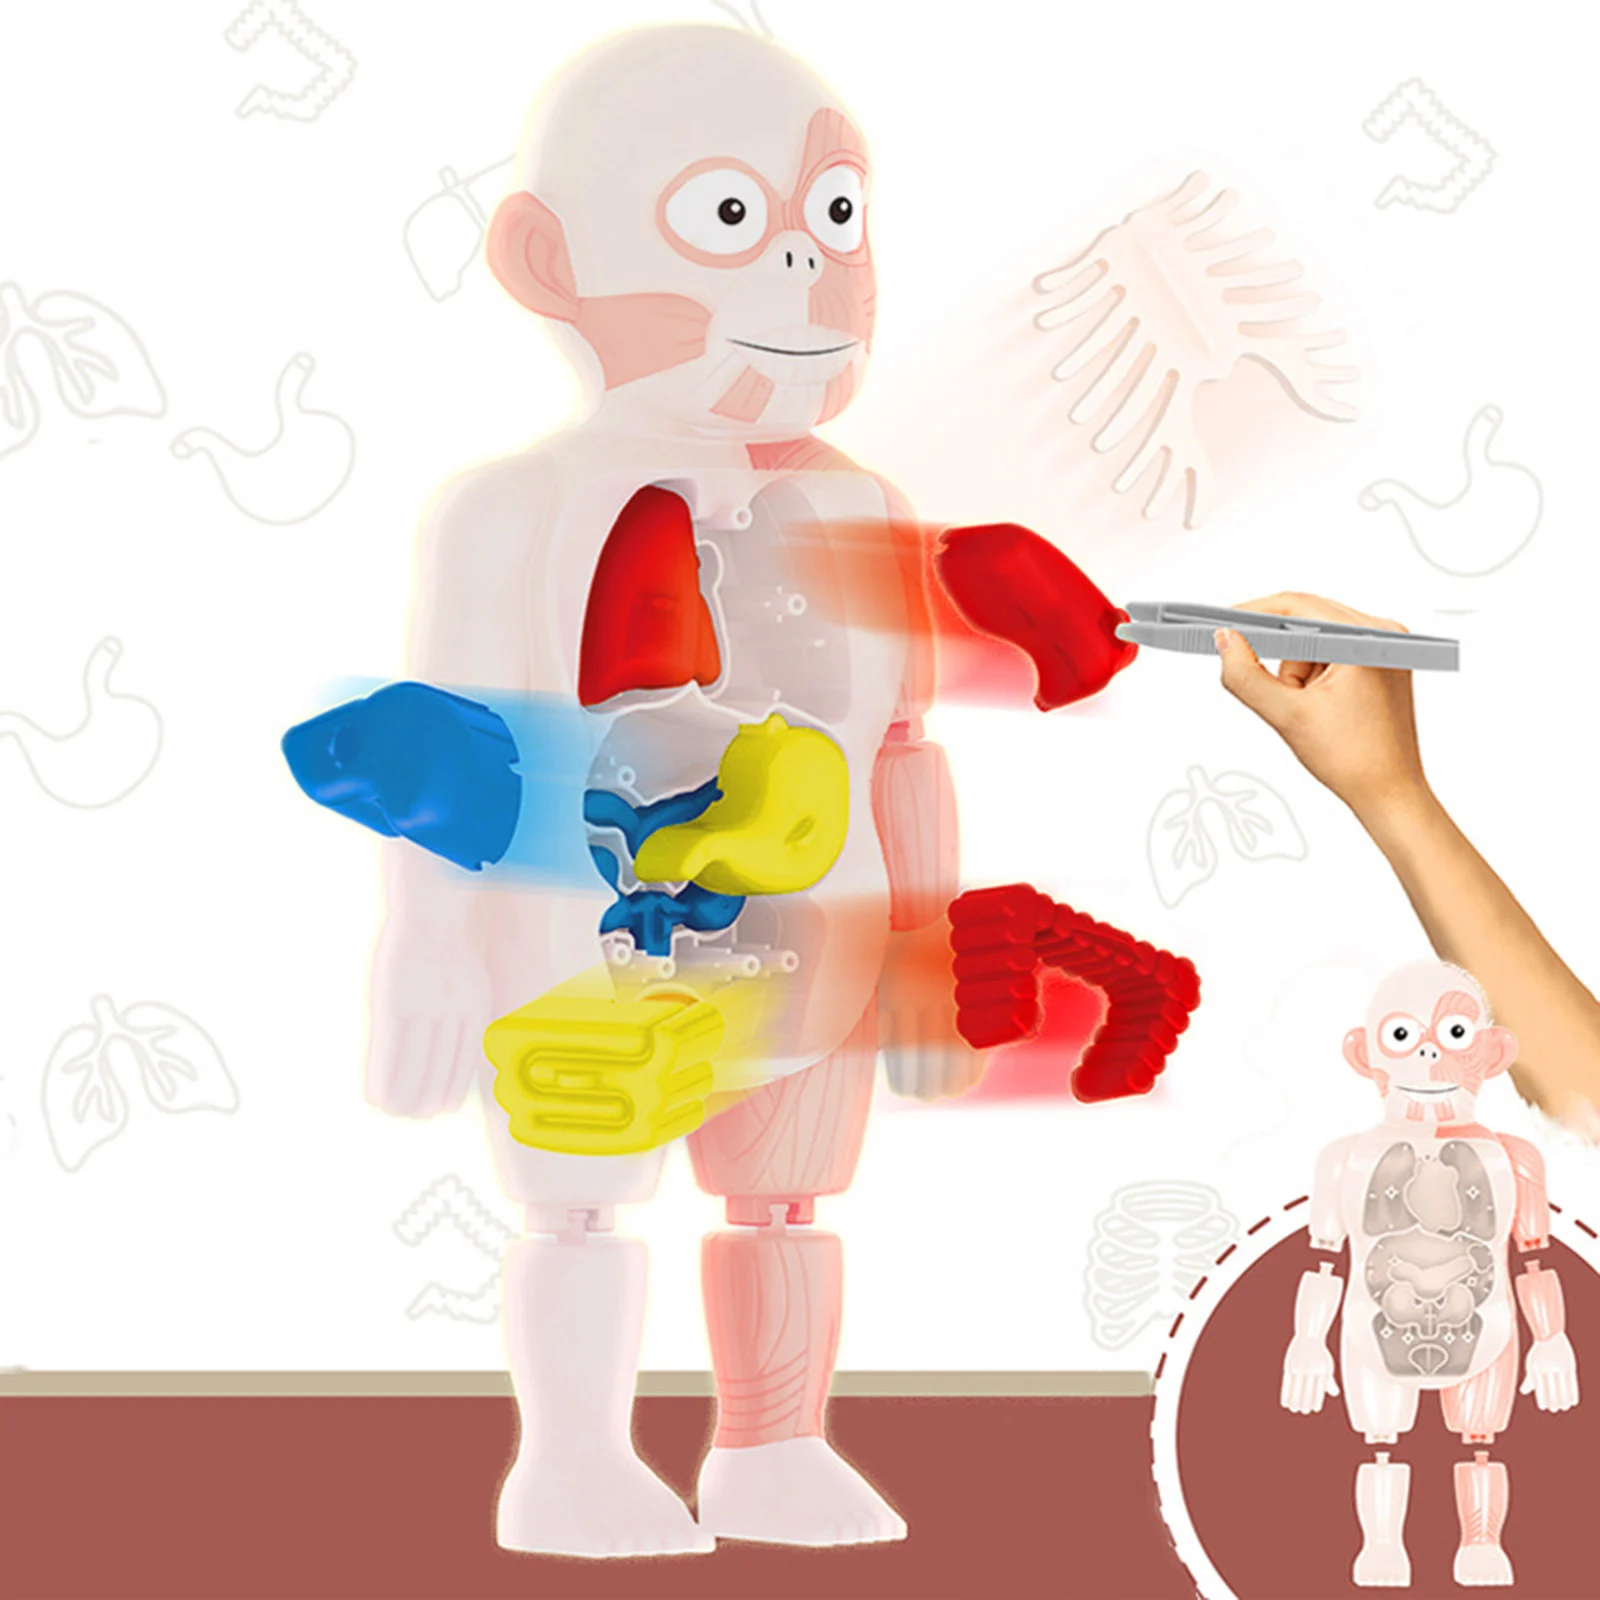 Human Body Removable Organs Anatomy DIY Assembled Toys Body Organ Ages 8+